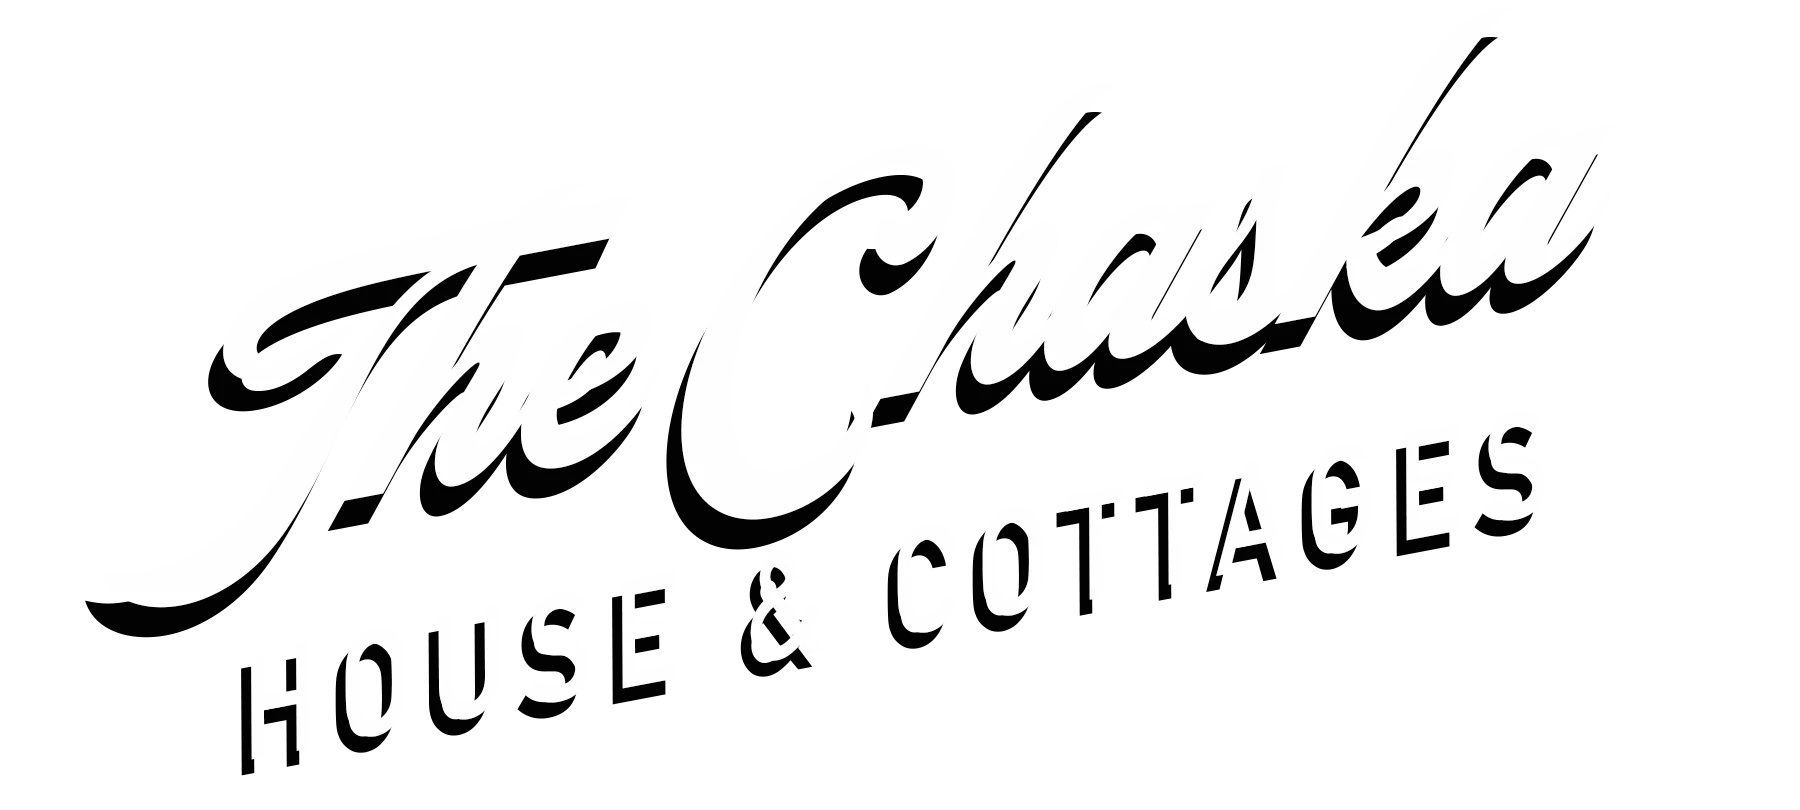 Chaska House & Cottages